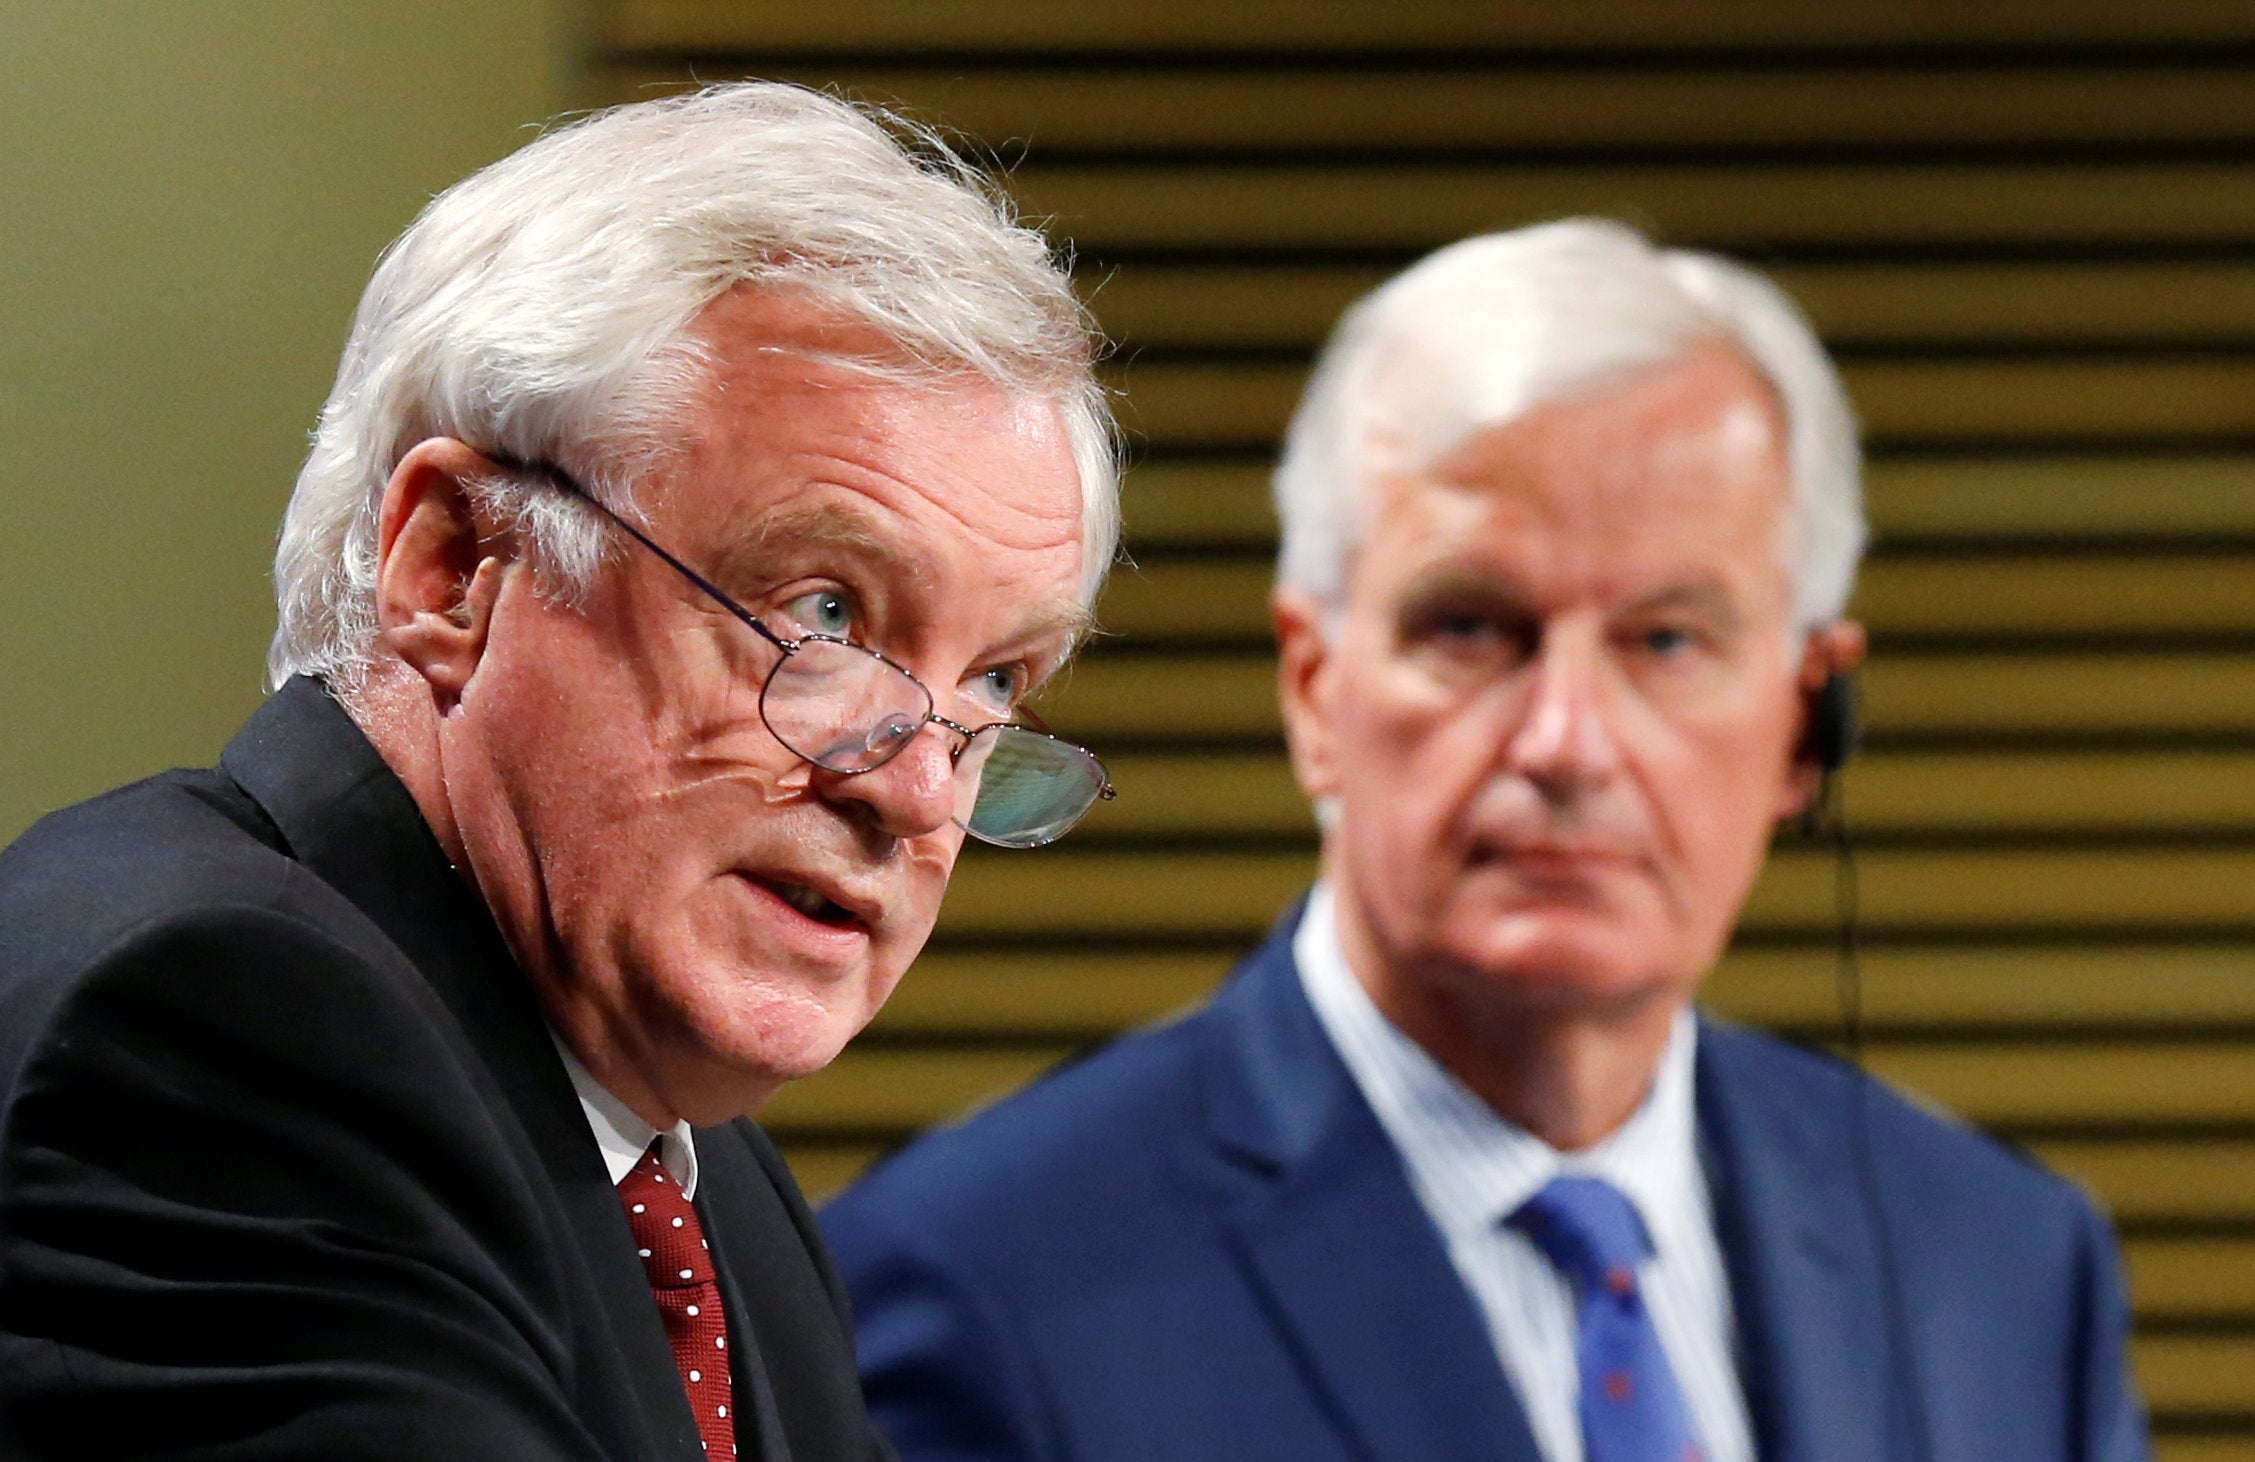 David Davis said Michel Barnier had "looked silly"